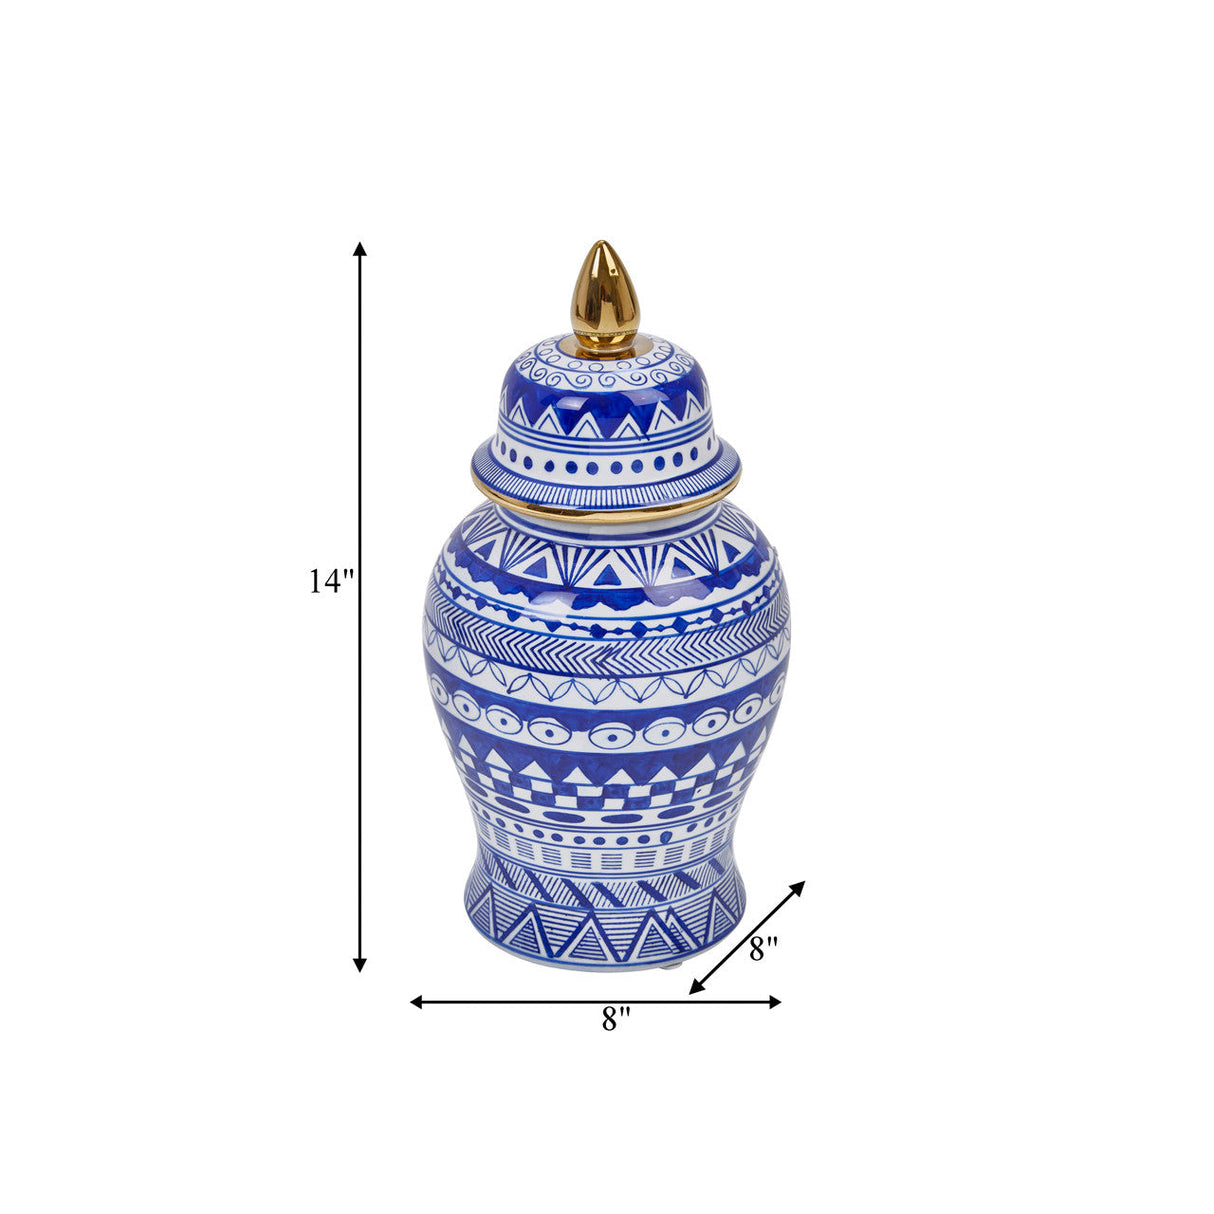 14" White/blue Temple Jar